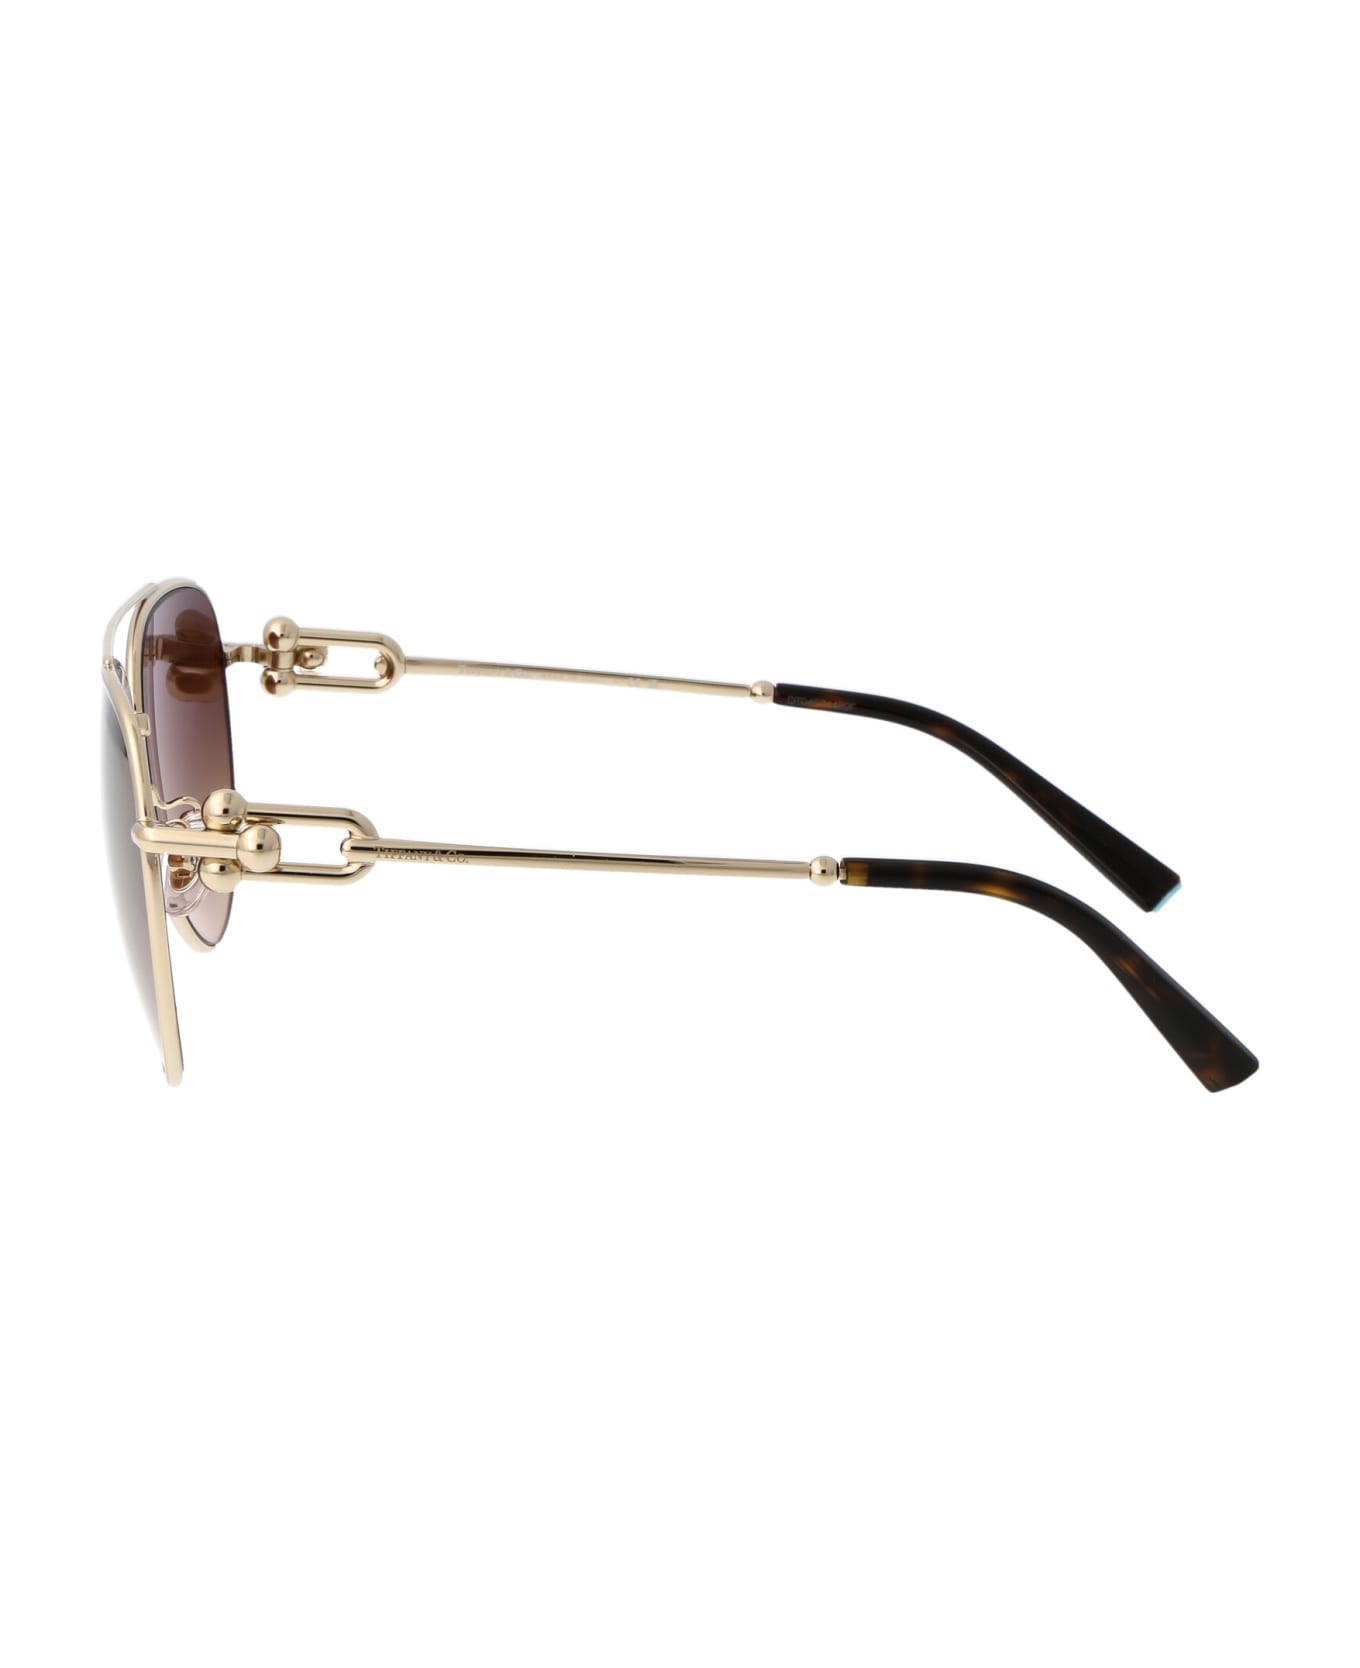 Tiffany & Co. 0tf3092 Sunglasses - 60213B Pale Gold